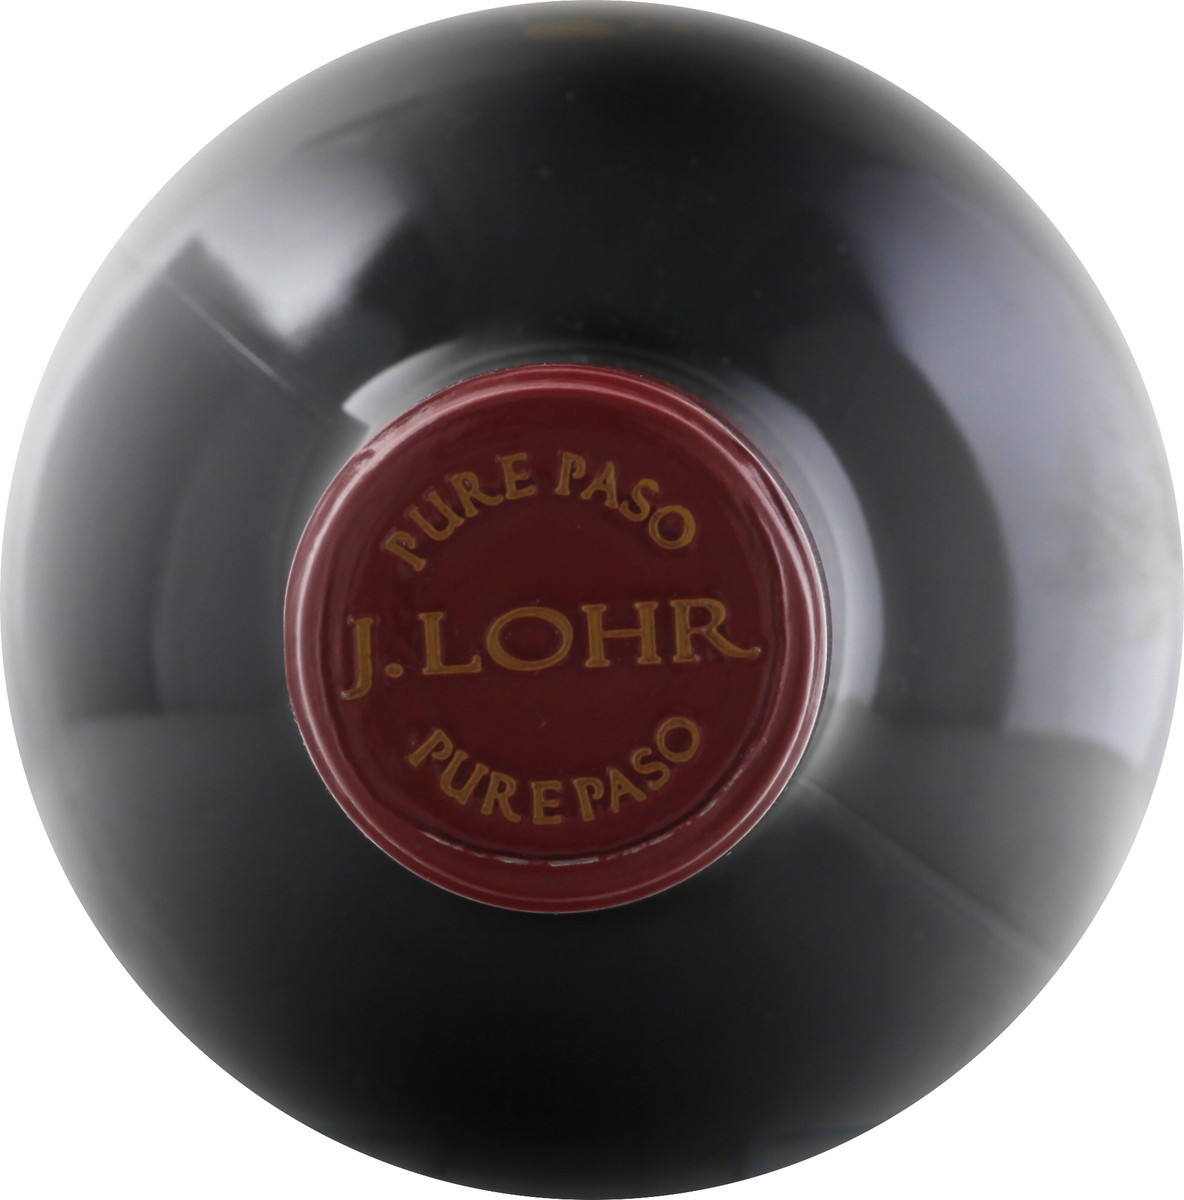 slide 9 of 9, J. Lohr Pure Paso Proprietary Red Wine, 750 ml